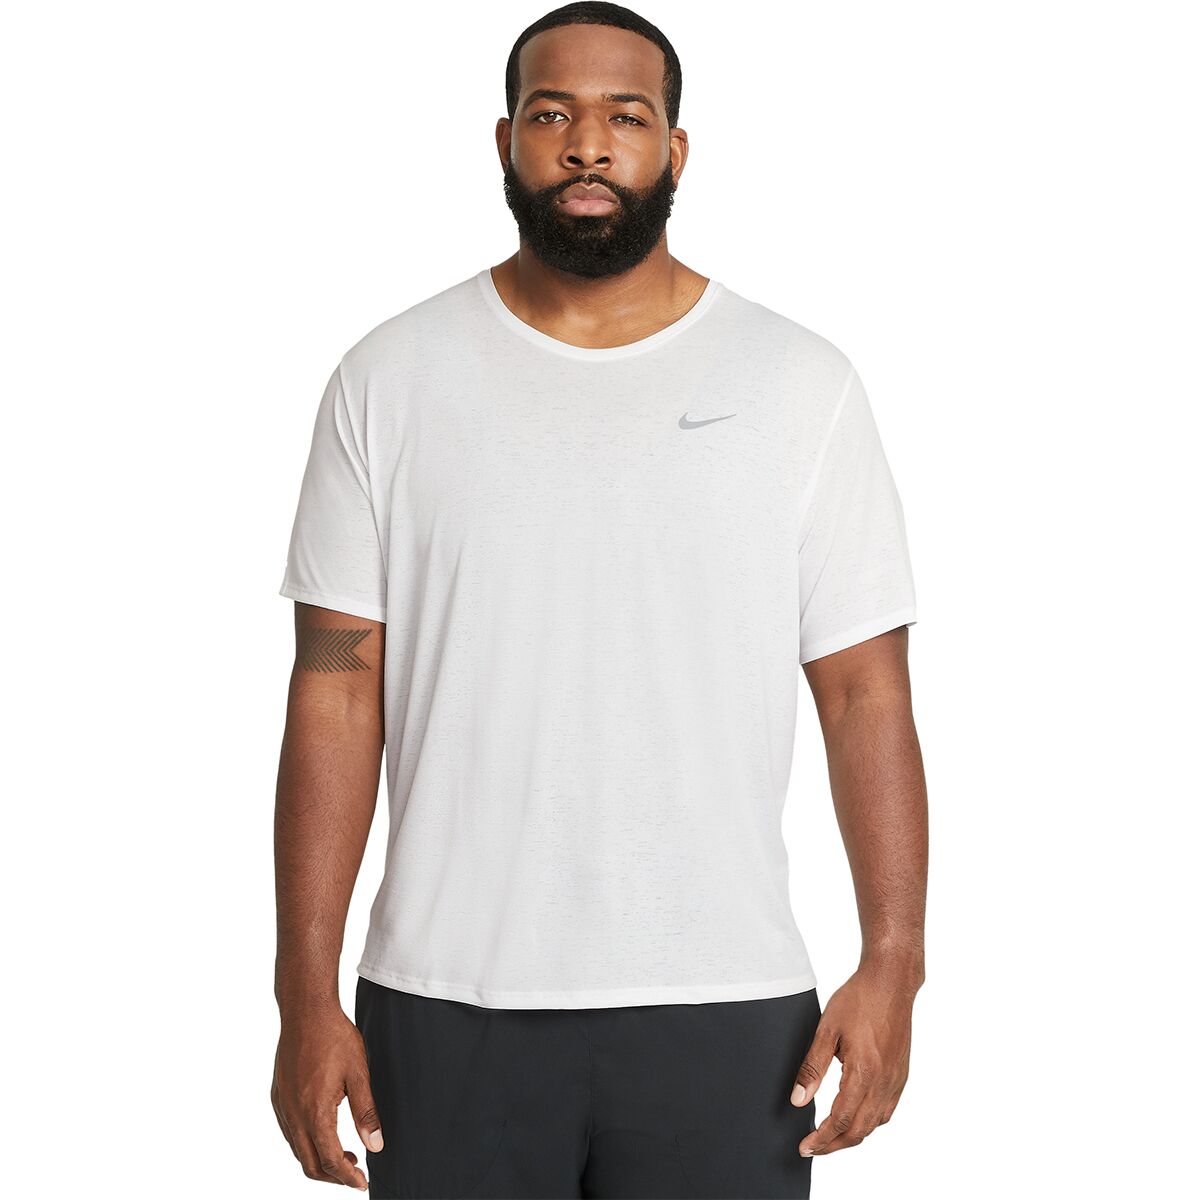 Nike Dry Top - Men's - Clothing